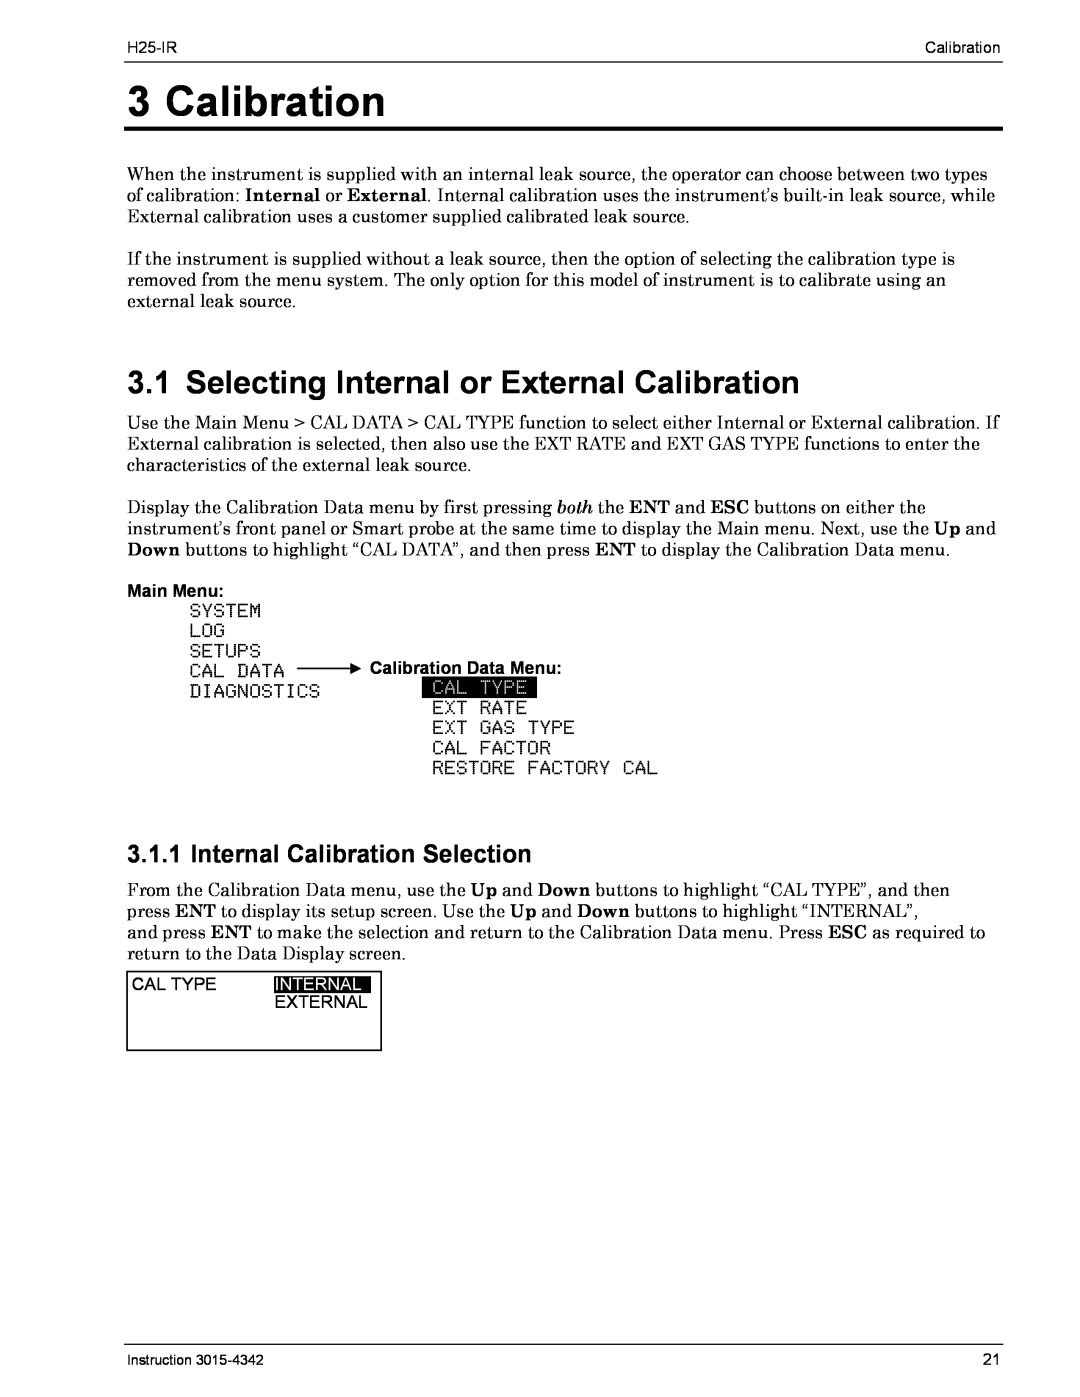 Bacharach H25-IR manual Selecting Internal or External Calibration, Internal Calibration Selection 